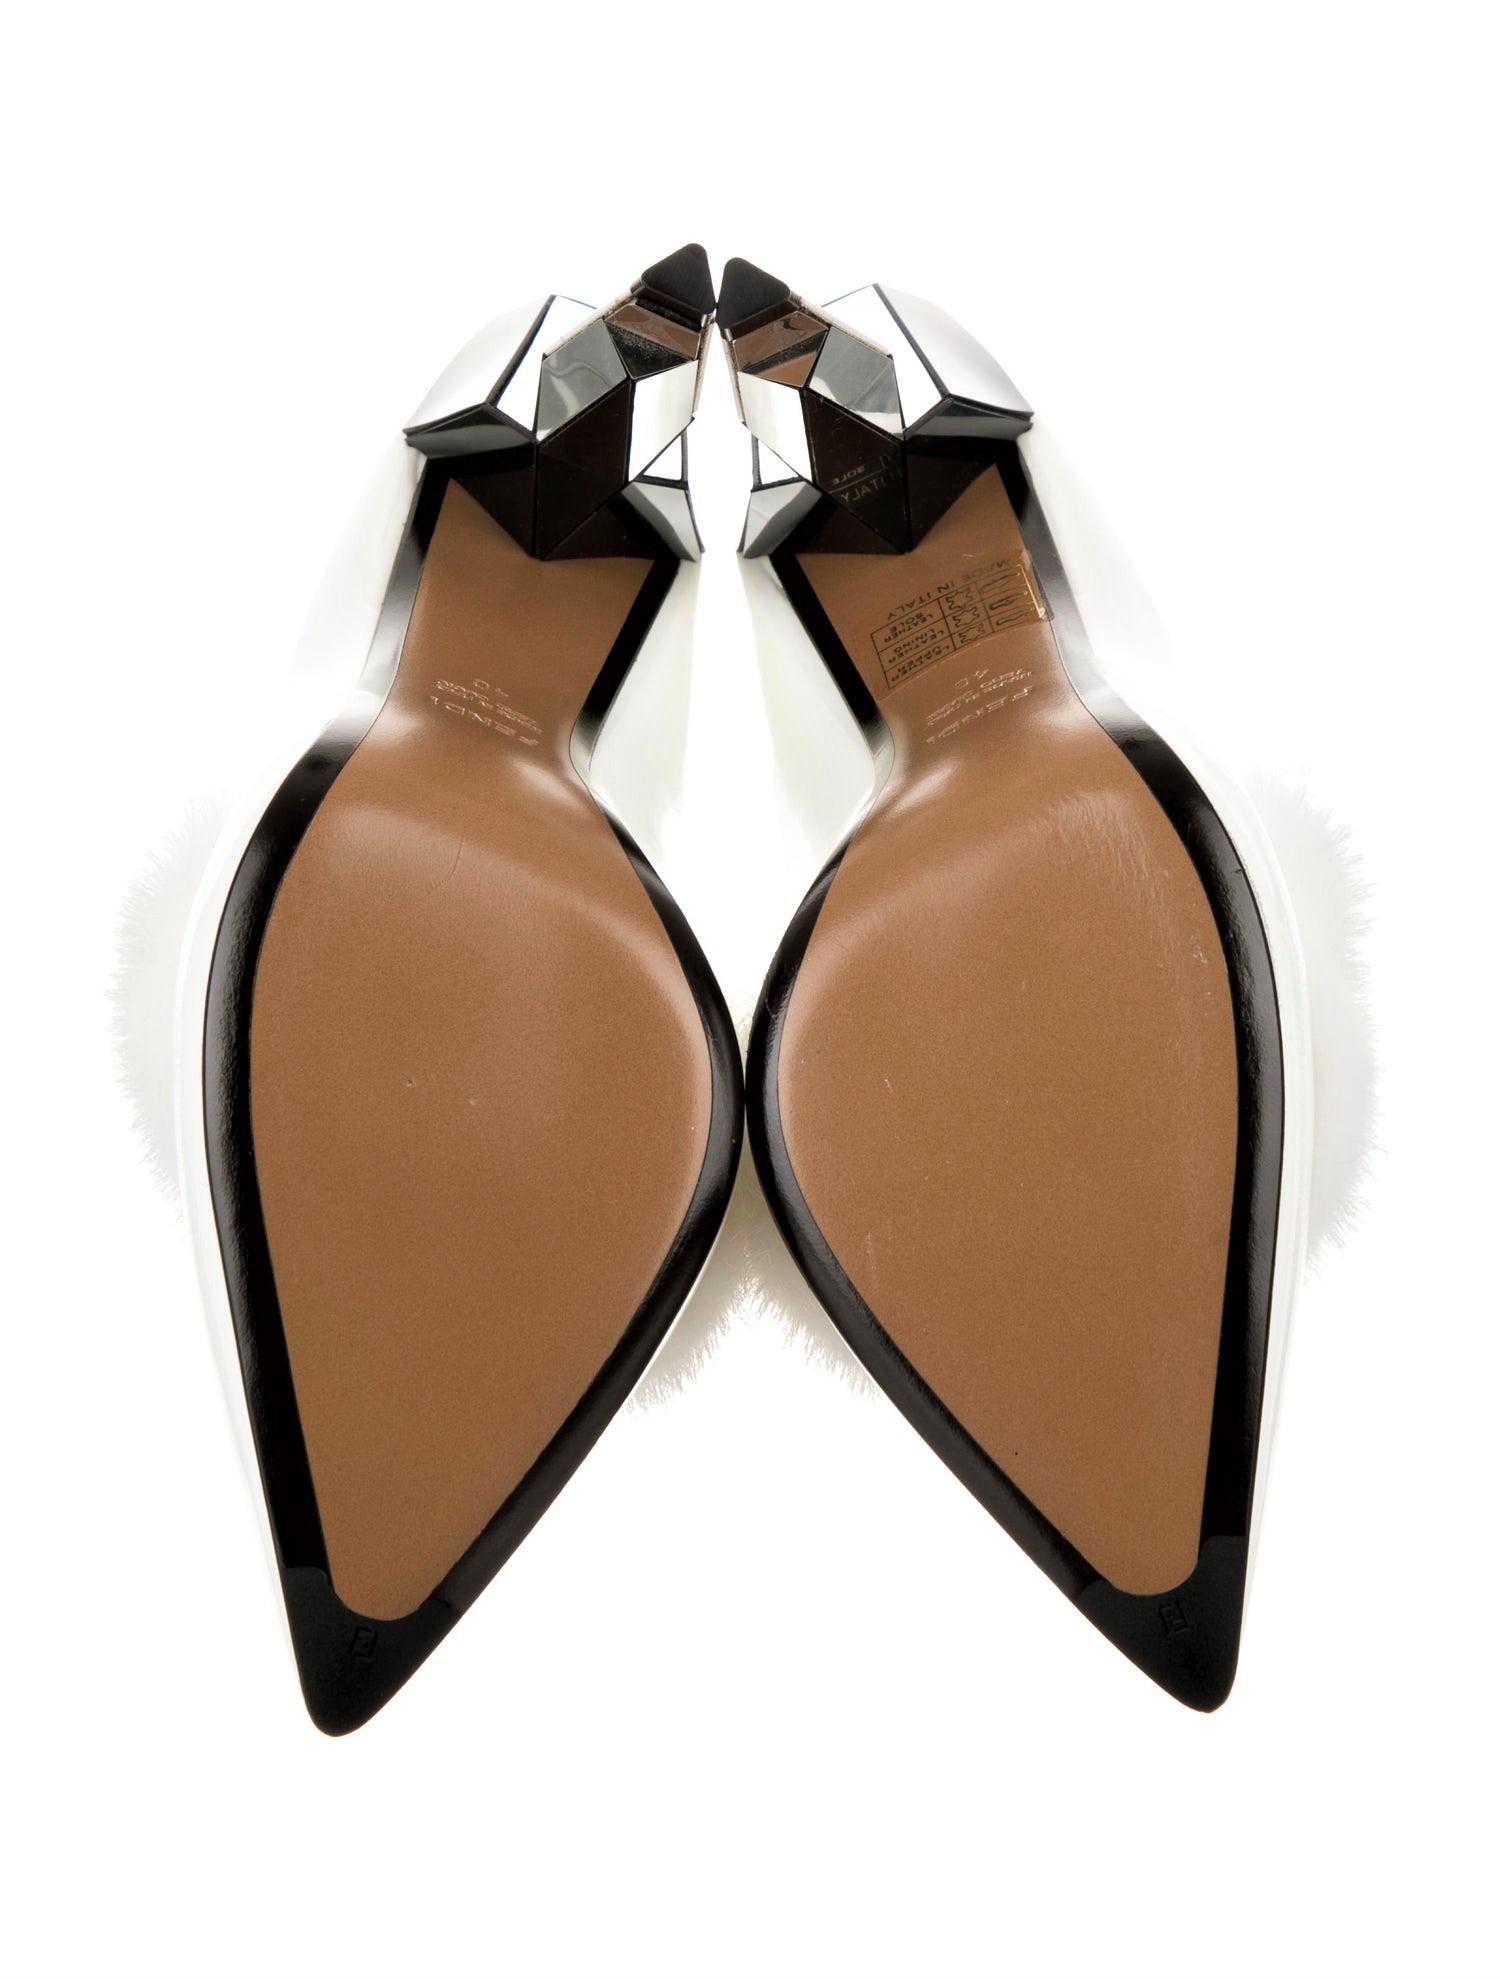 Fendi Karl Lagerfeld Rare Runway Art Déco - Bottines en cuir et fourrure de renard, taille 40, état neuf 15